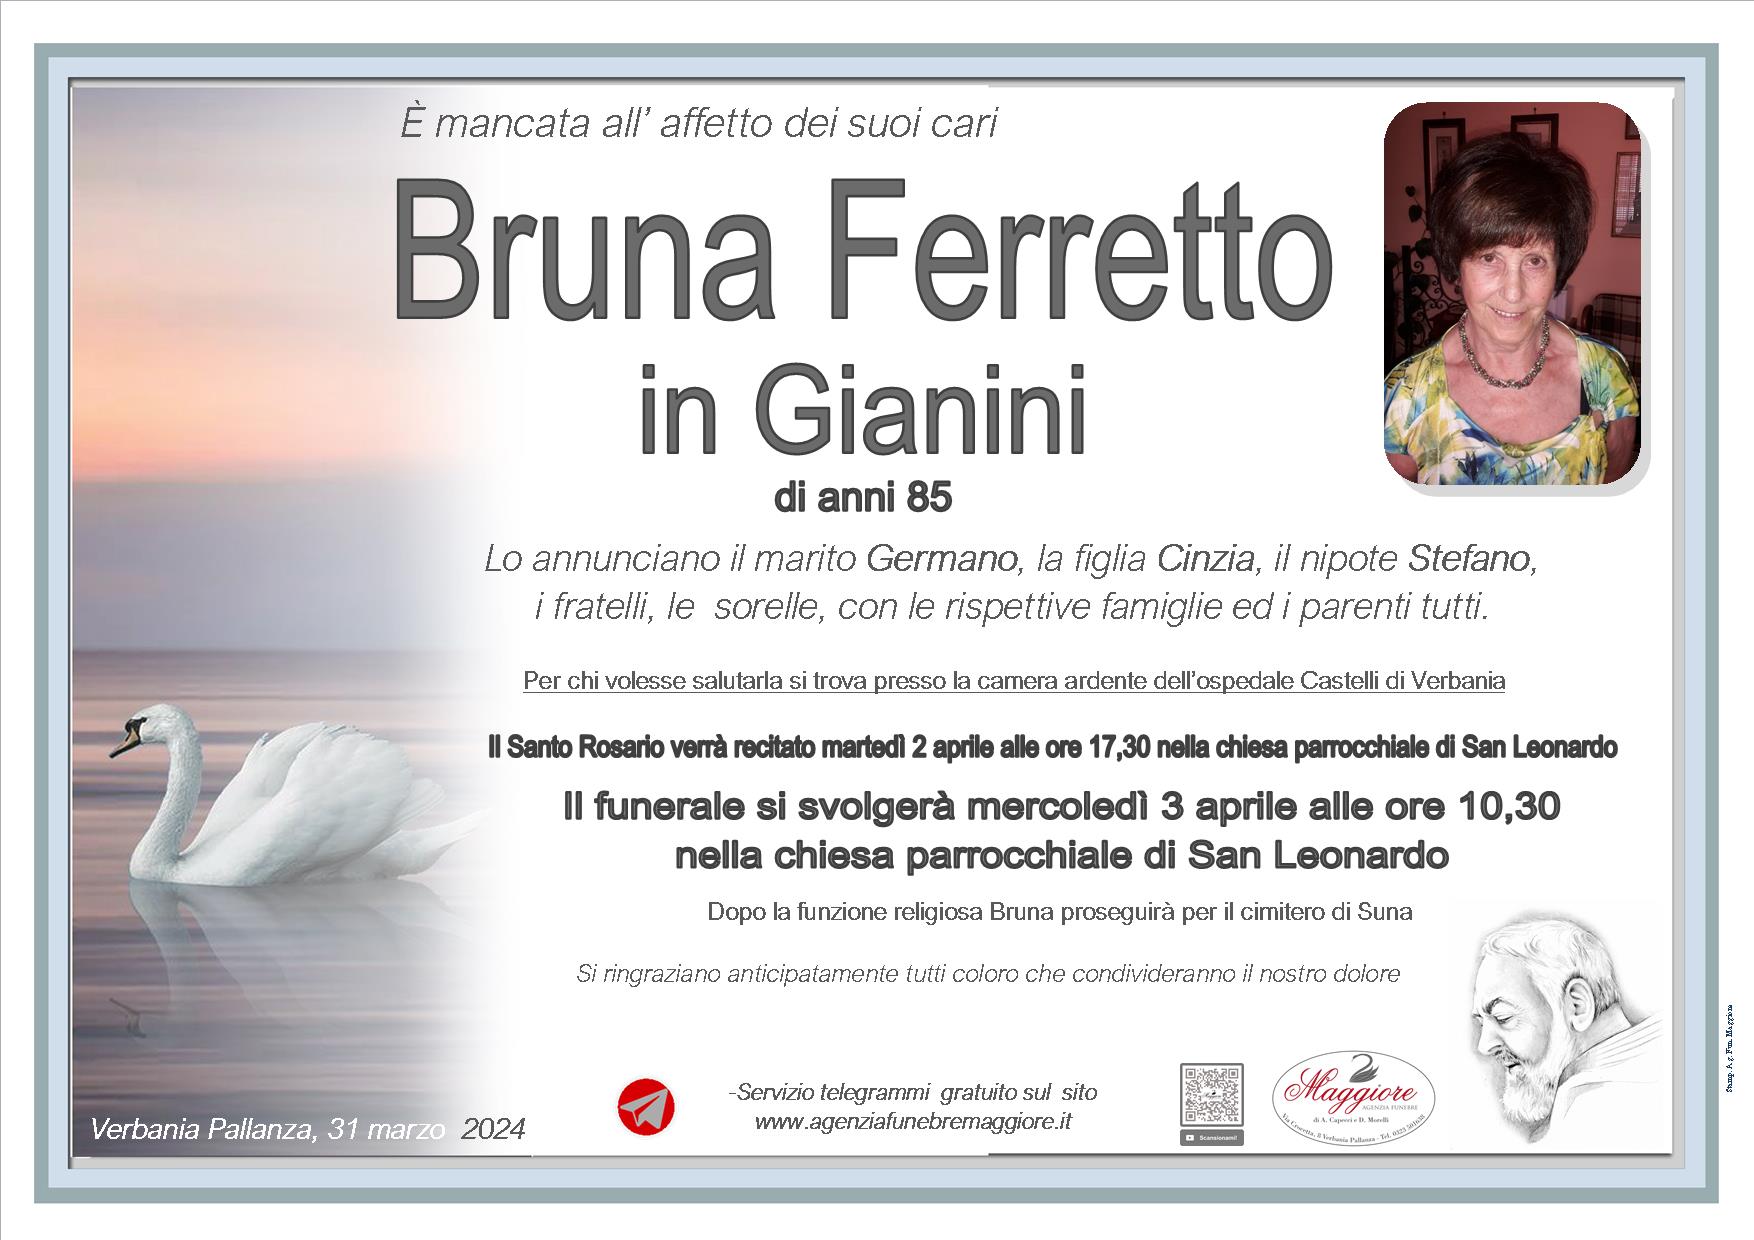 Bruna Ferretto in Giannini